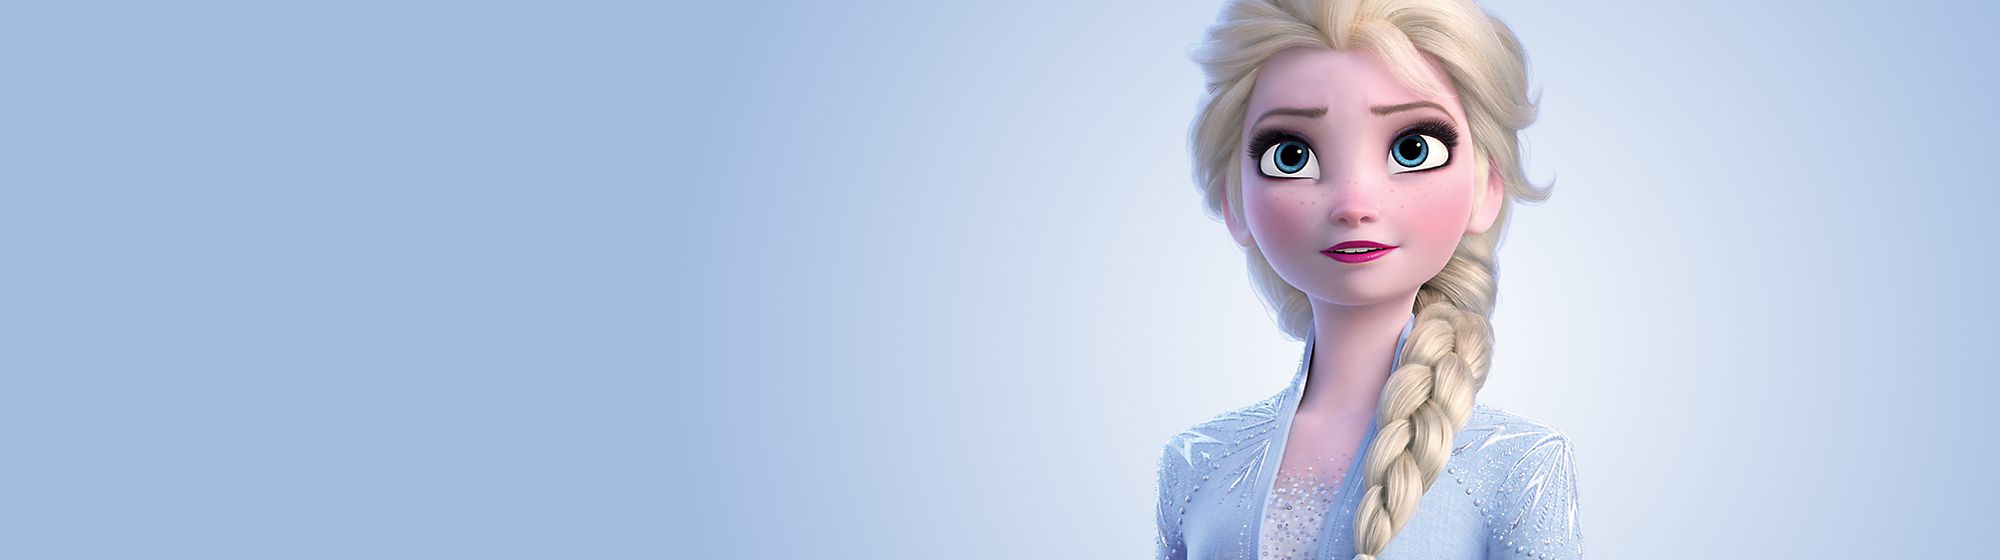 EU; 32/33 Frozen 2 Taglia UK; 13/1 D Disney Store Elsa Costume Stivali Per Bambini 